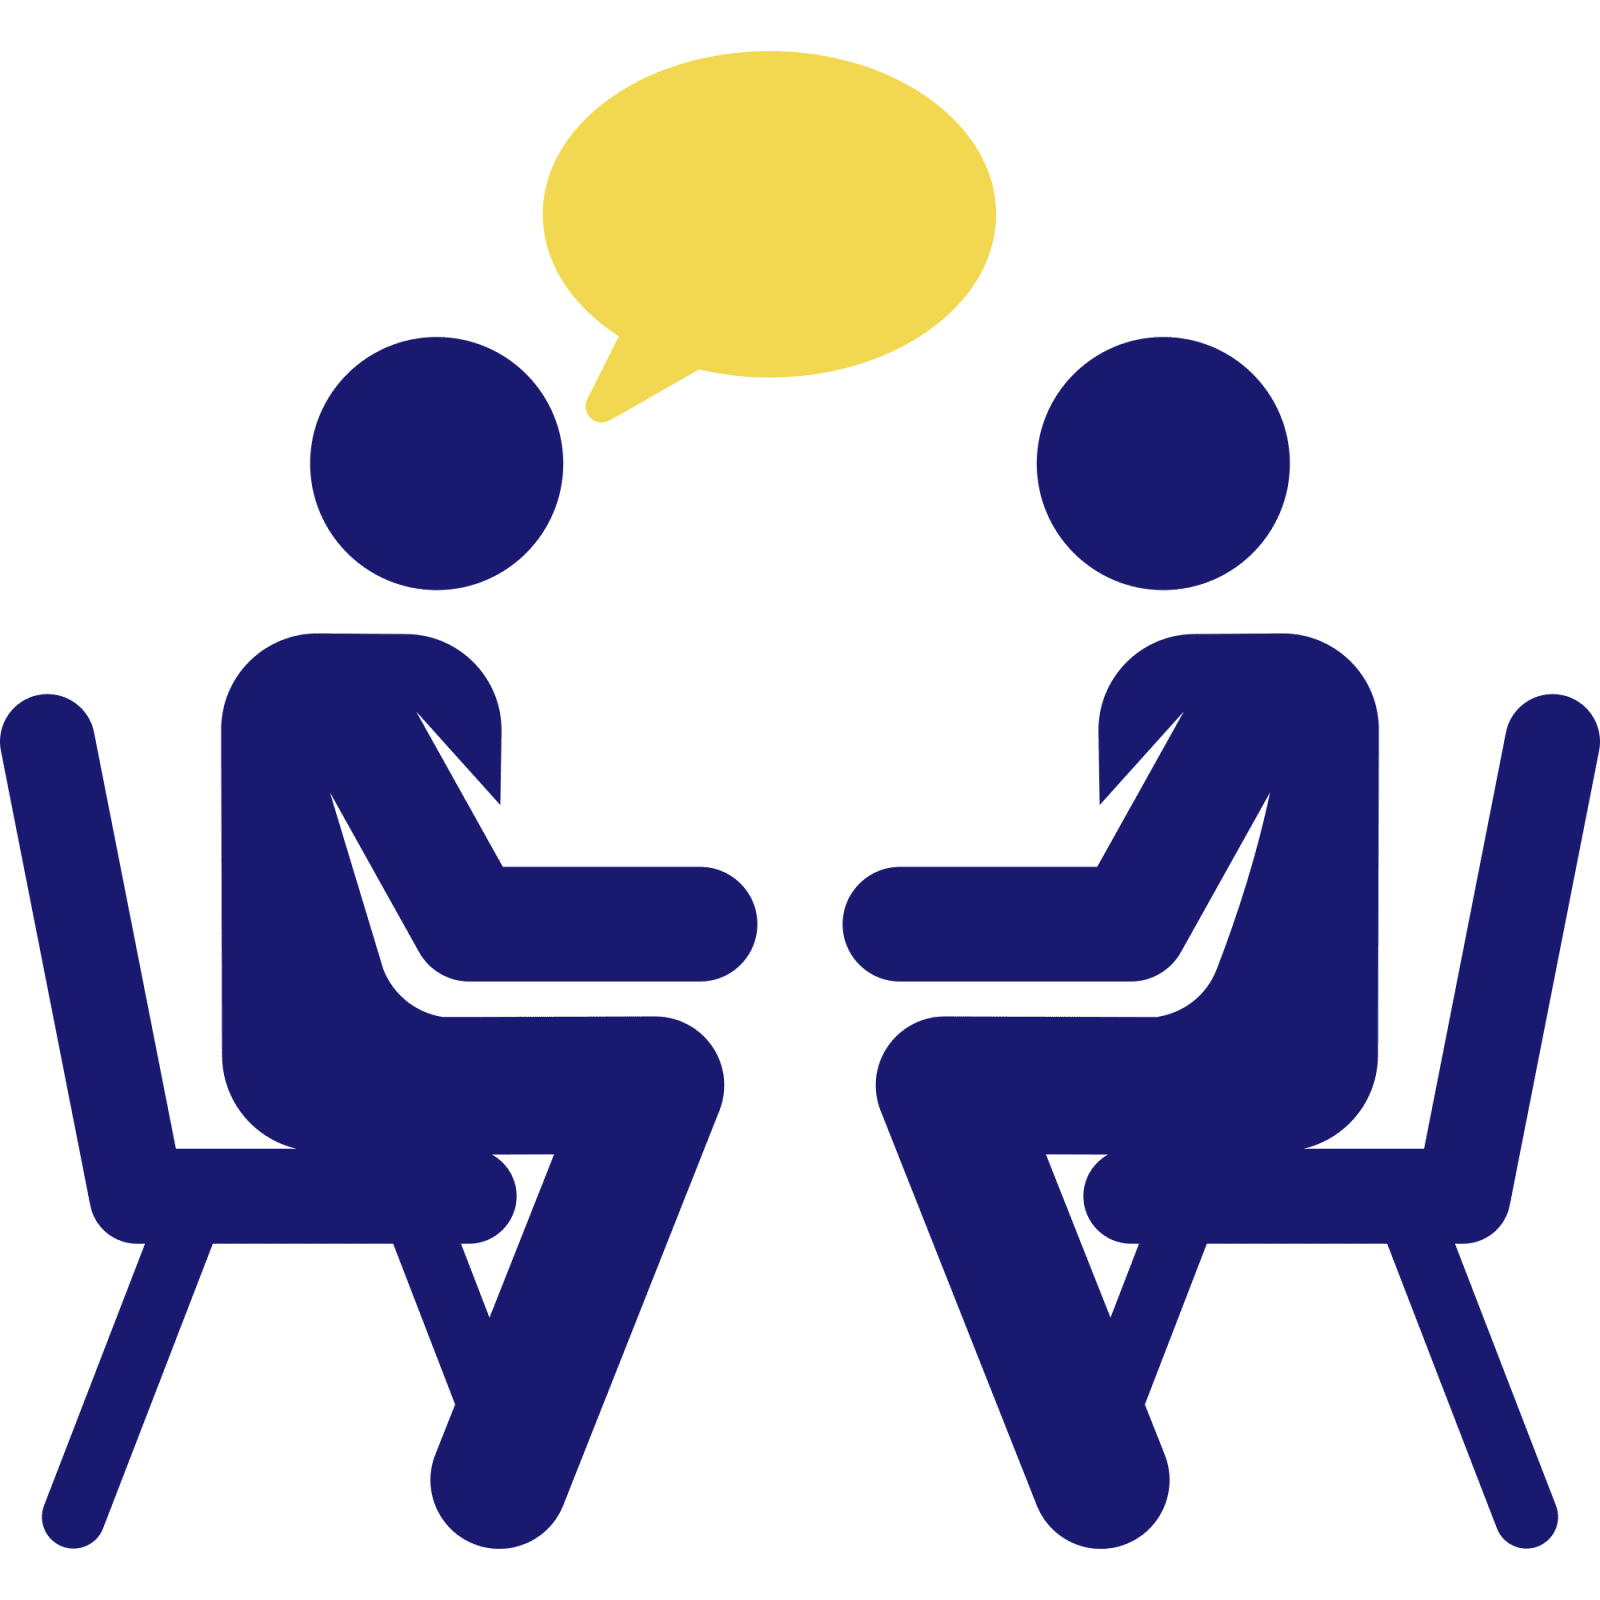 How to Teach Conversational English